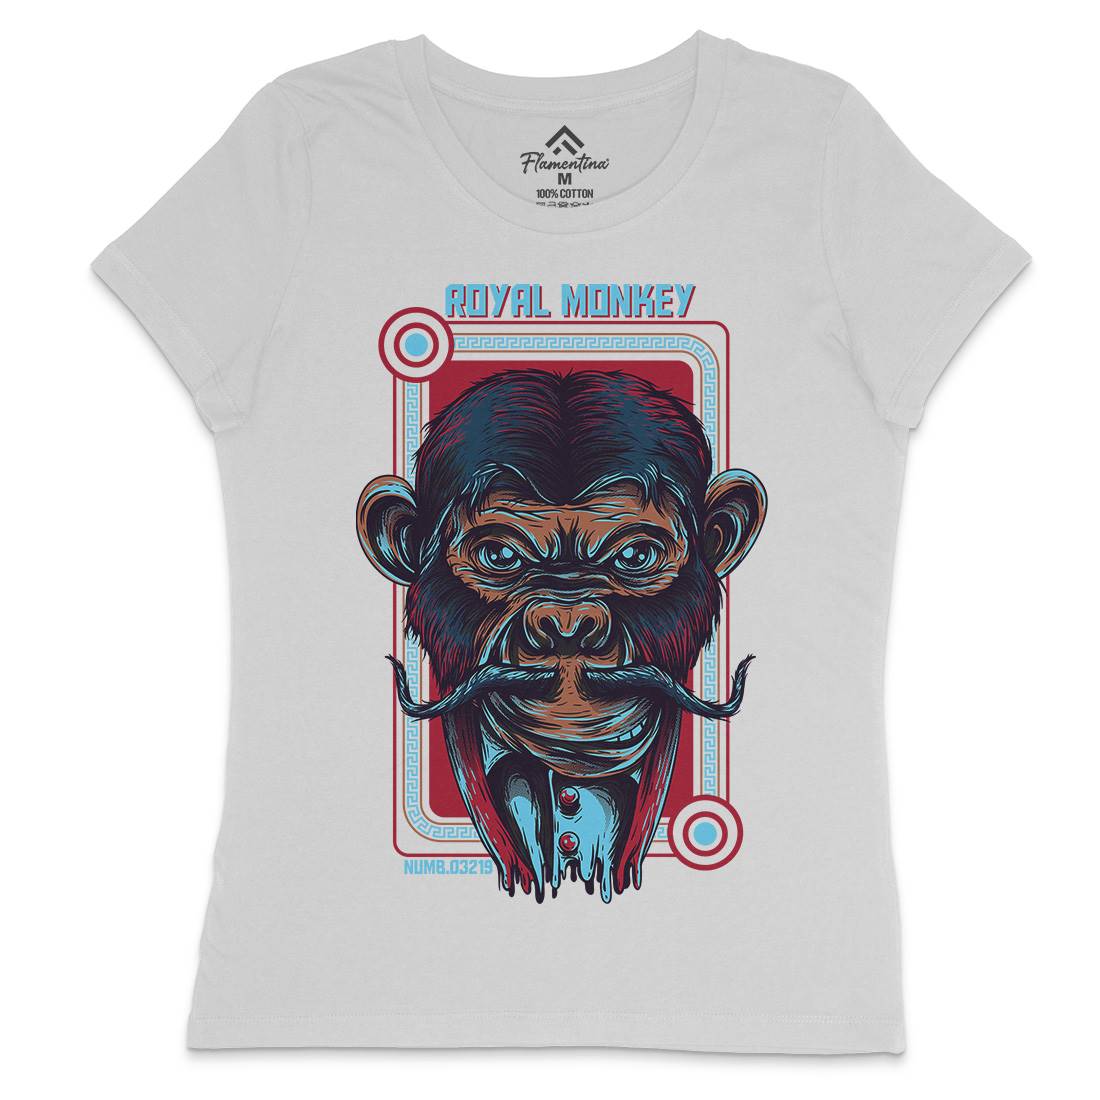 Royal Monkey Womens Crew Neck T-Shirt Animals D806